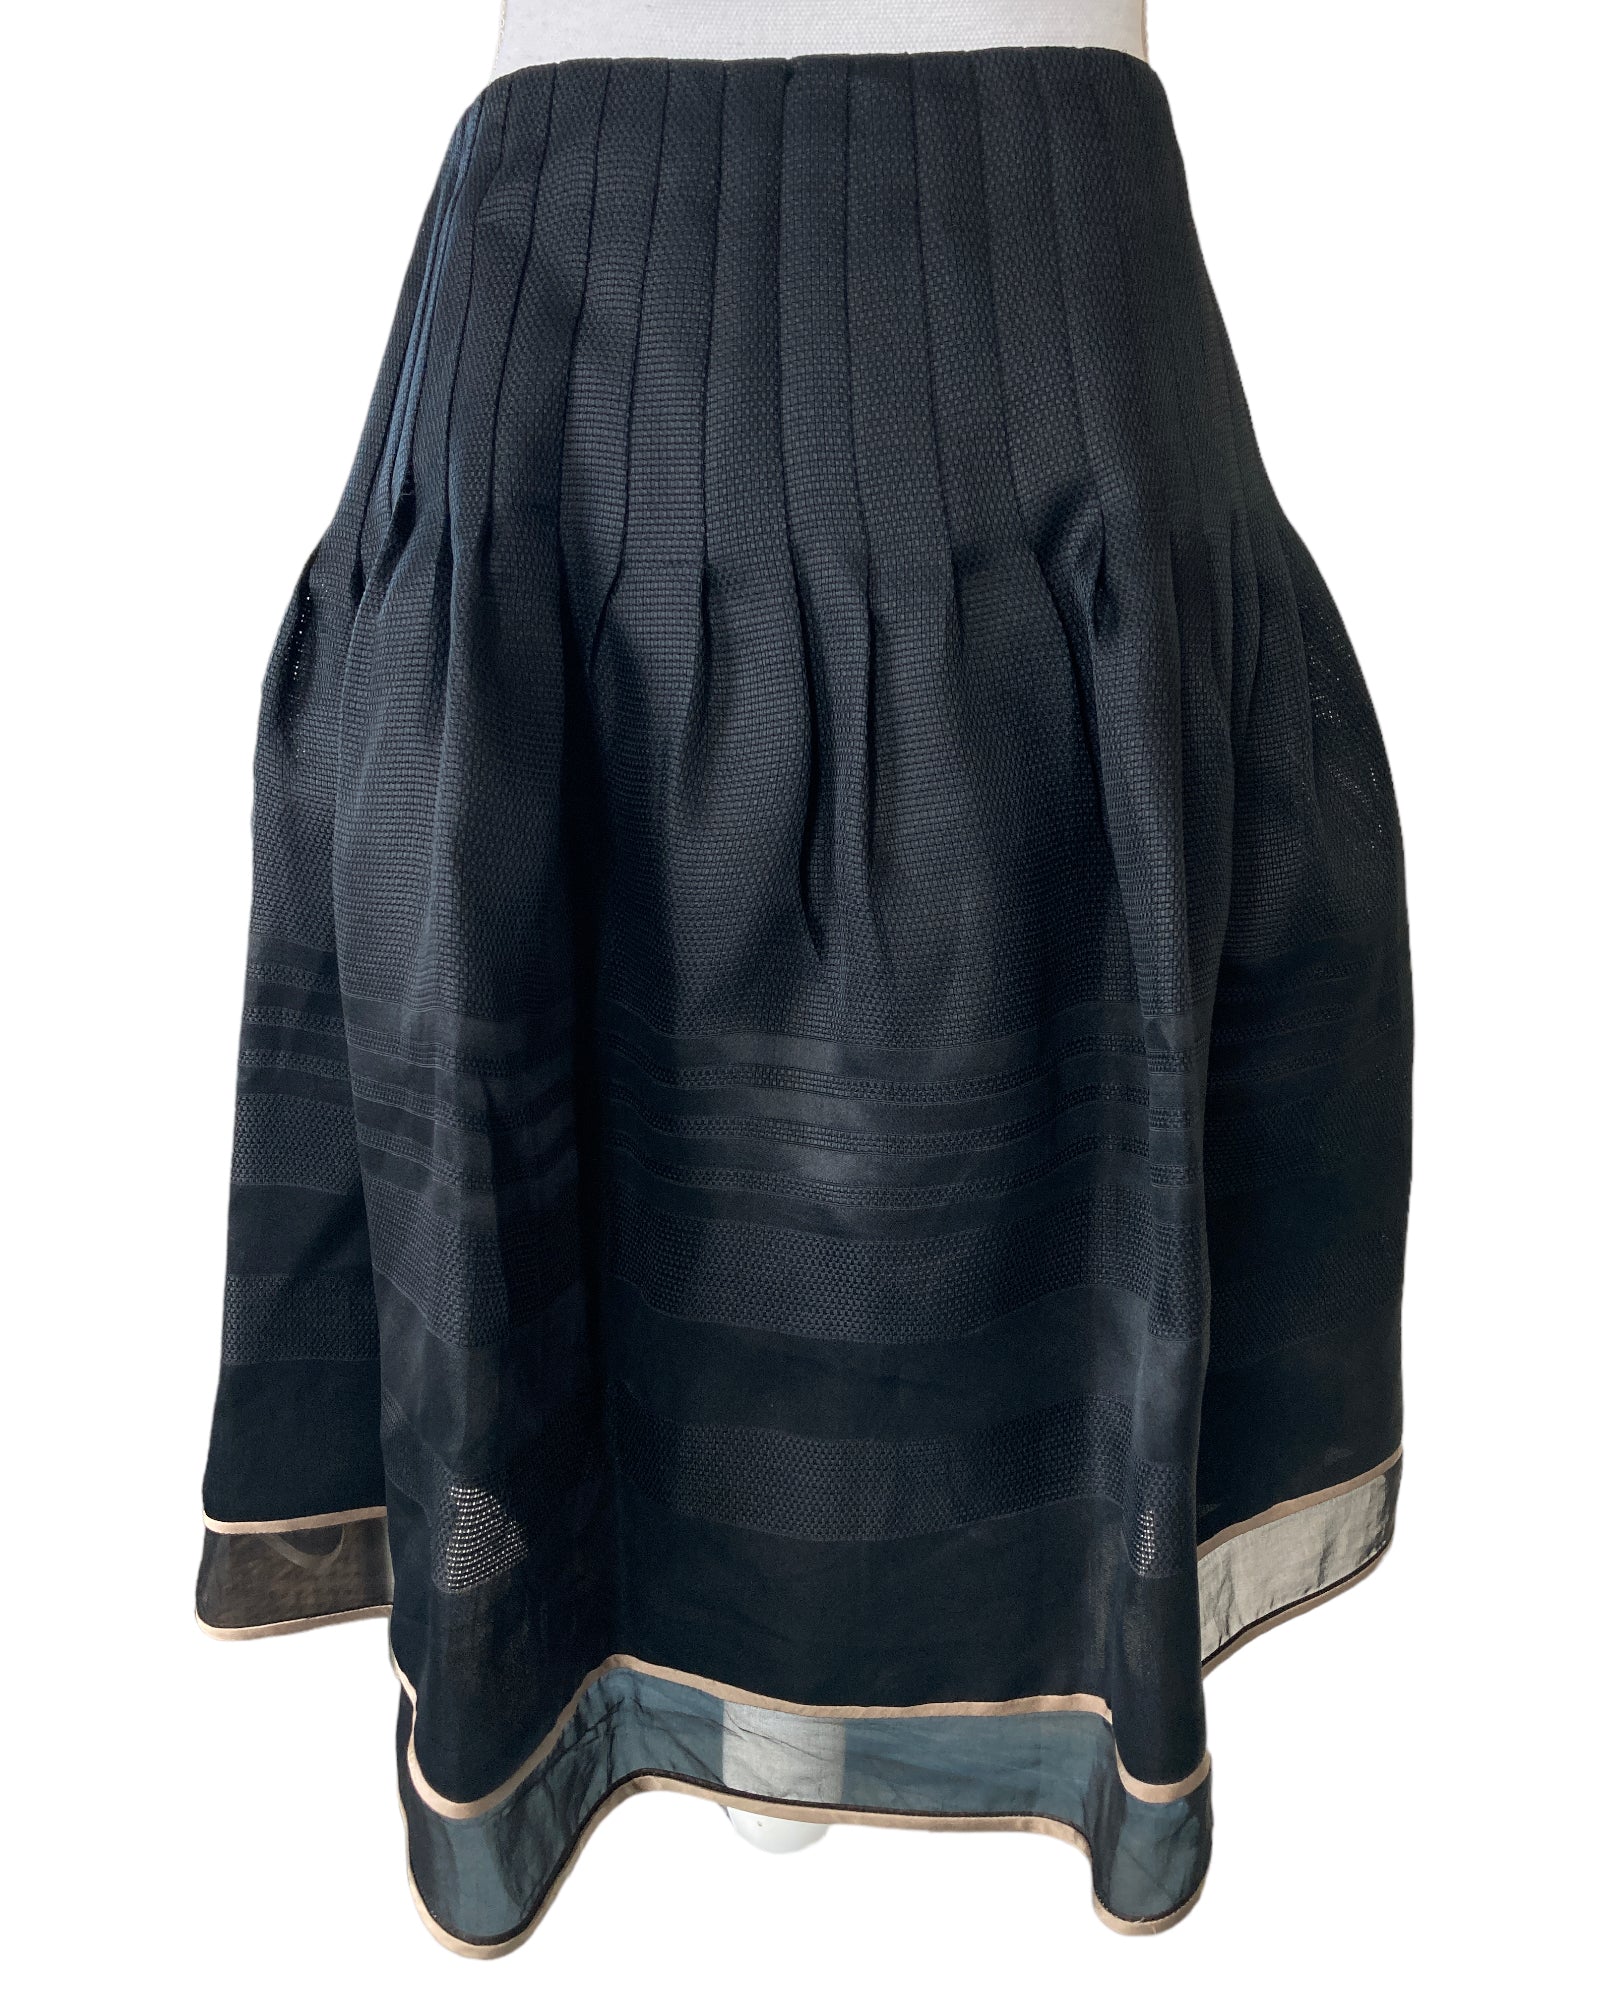 Kay Unger Black Silk Skirt with Sheer Trim, 10